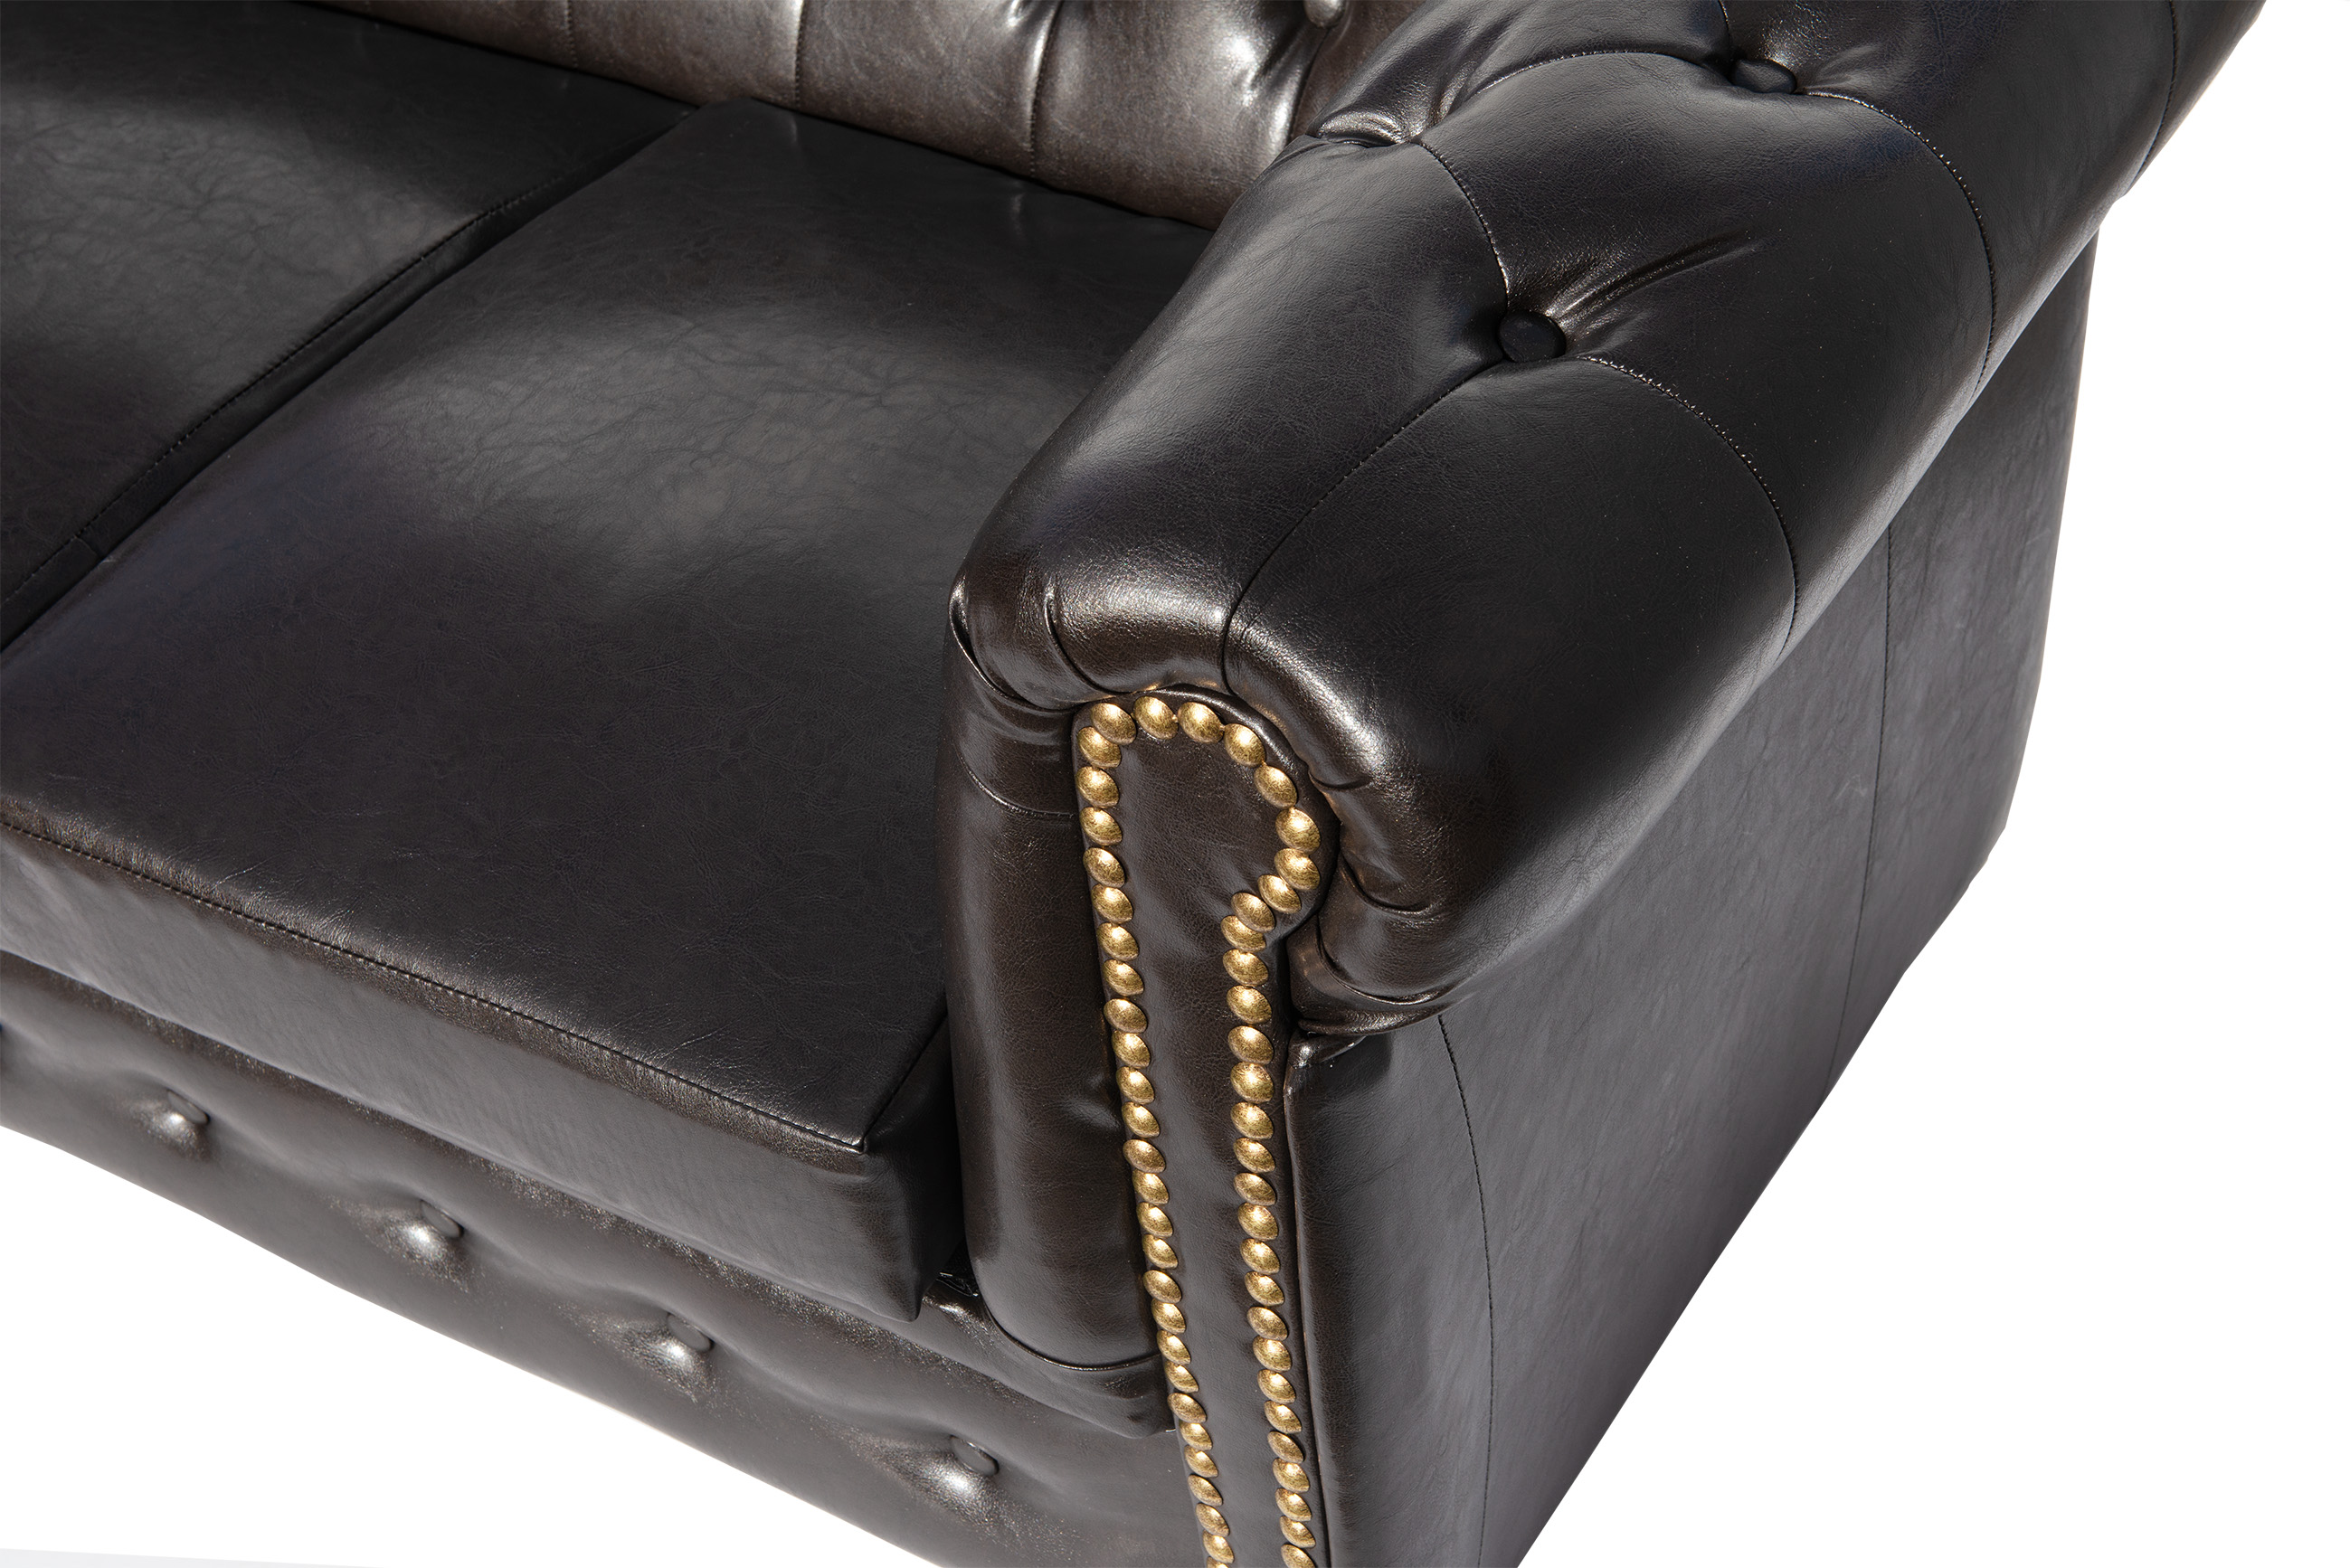 Sofa CHESTERFIELD 3-Sitzer Vintage Black 